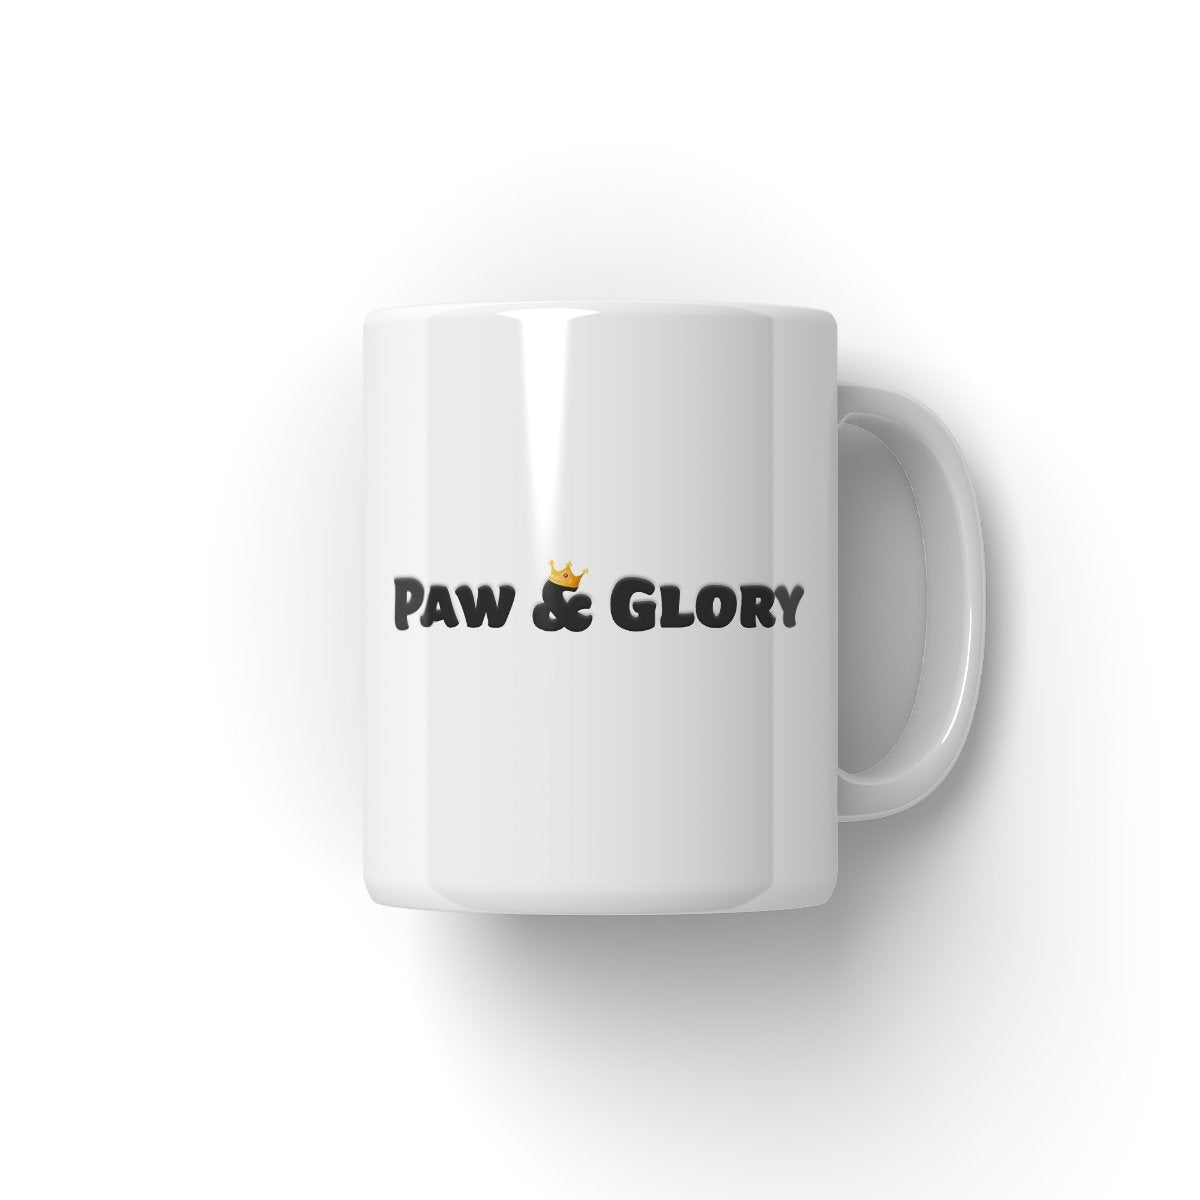 Cartoon: Custom 2 Pet Mug - Paw & Glory - #pet portraits# - #dog portraits# - #pet portraits uk#paw and glory, custom pet portrait Mug,dog face mug, coffee mug prints, personalised dog mug, coffee mug for her, your dog on a mug